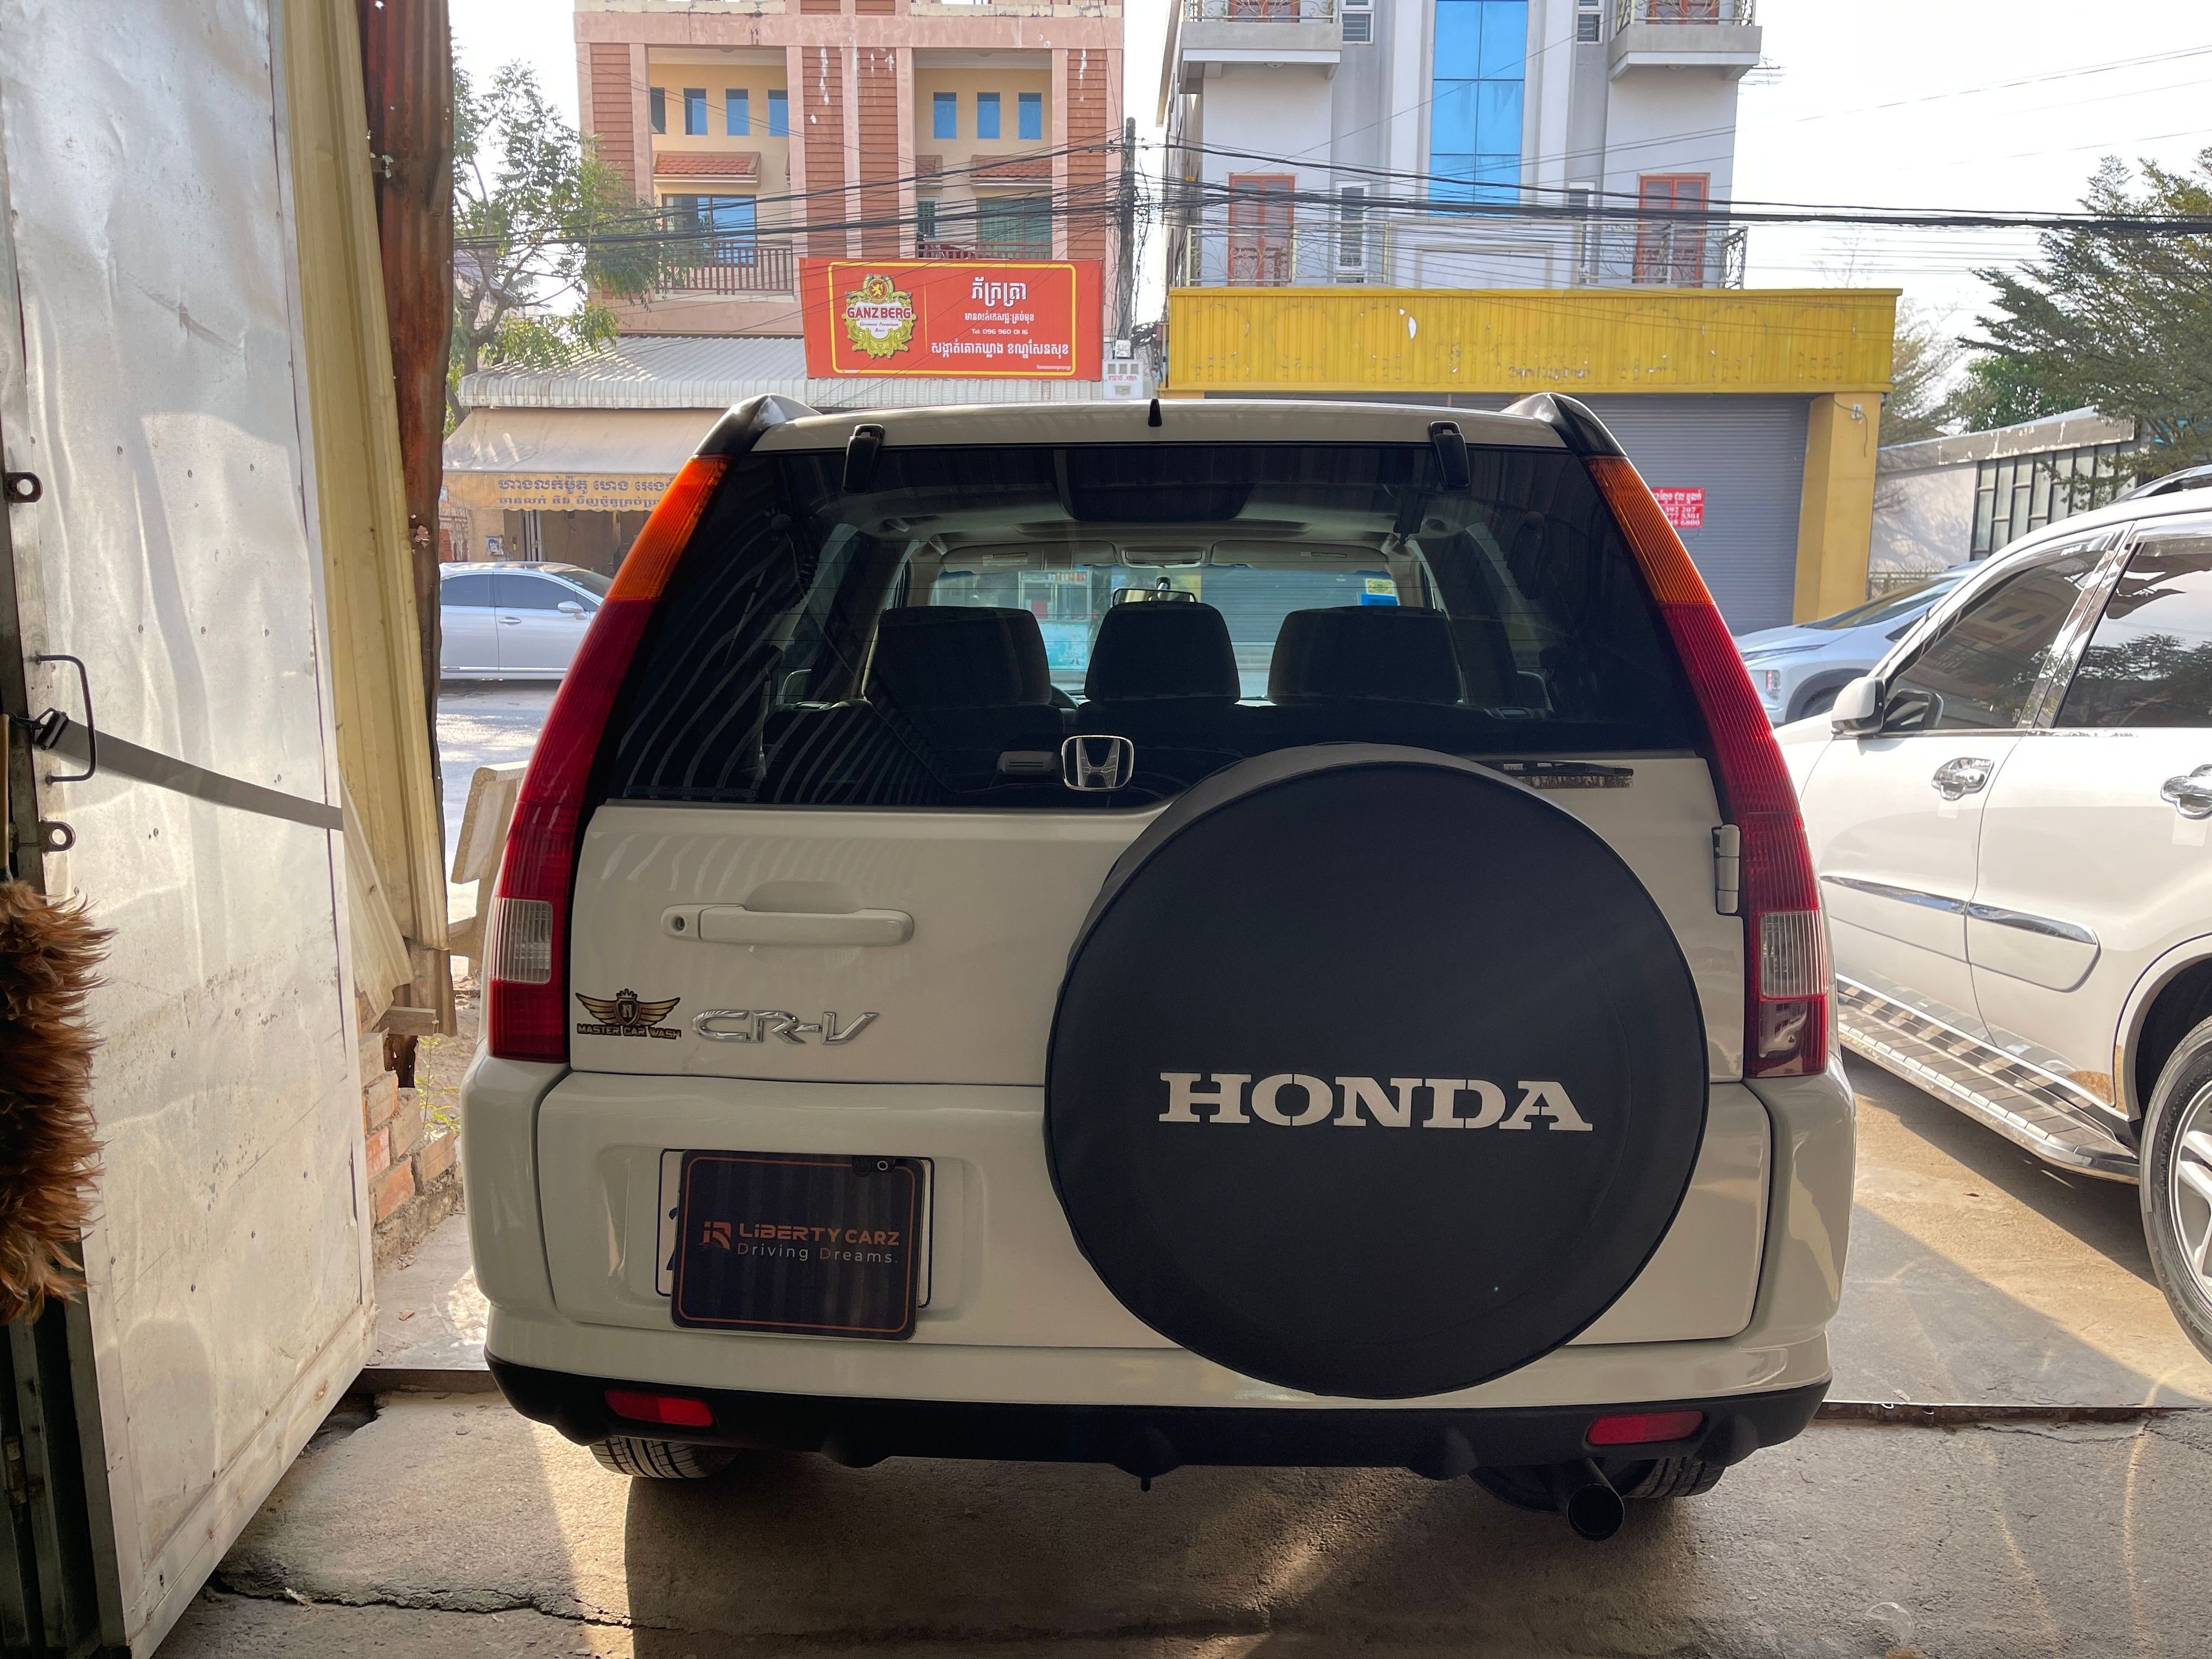 Honda CRV 2002